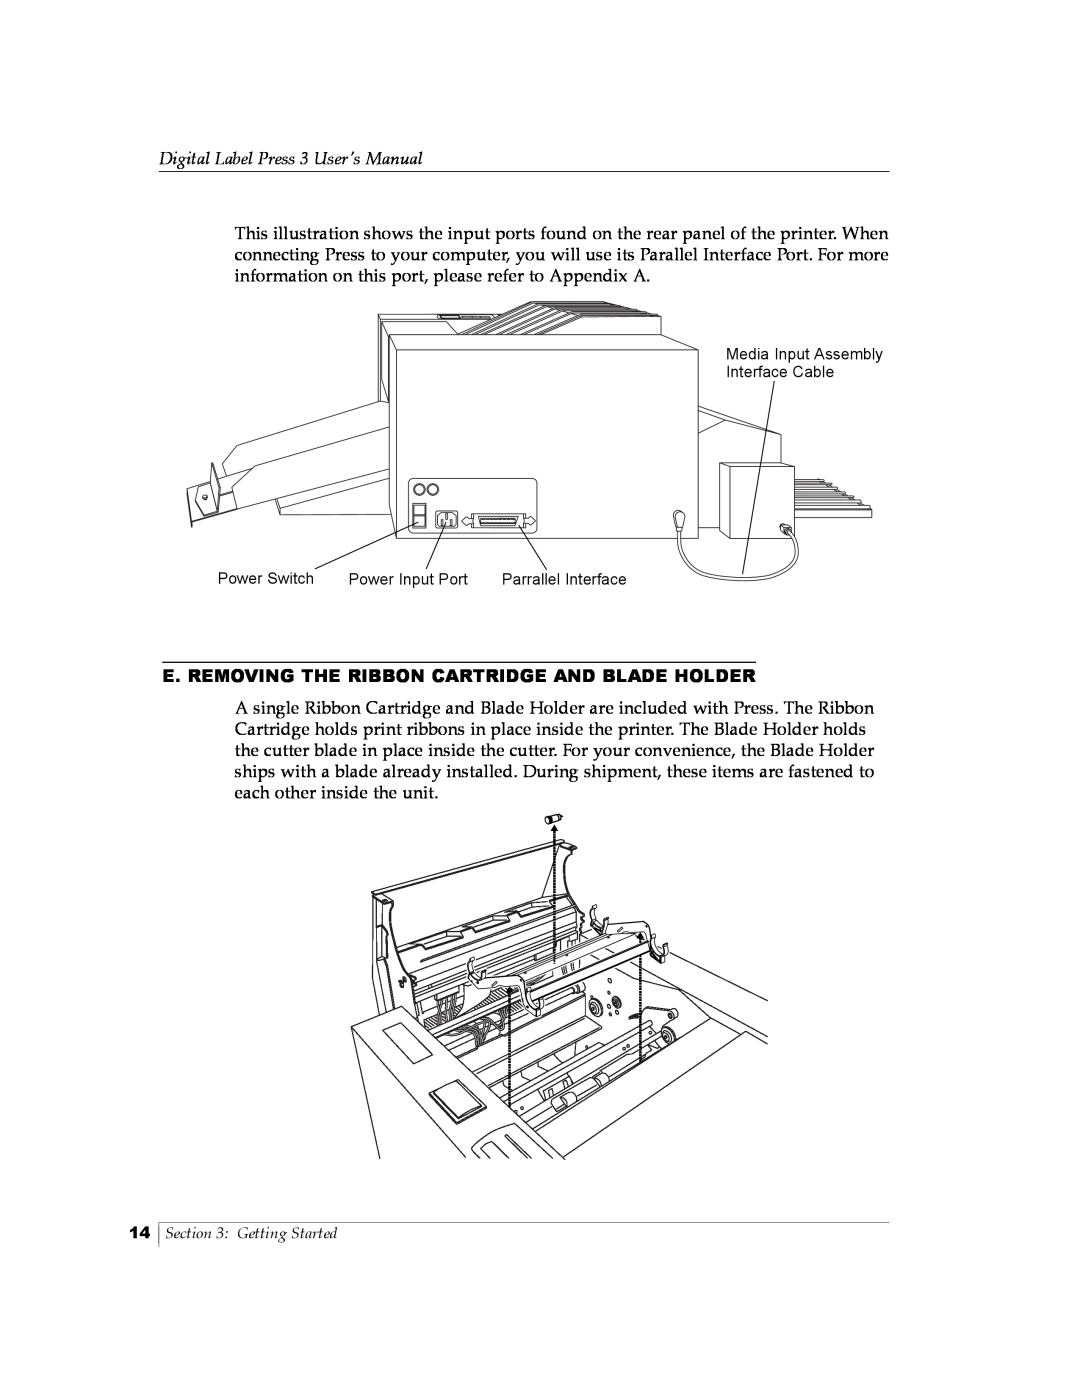 Primera Technology 510212 manual E. Removing The Ribbon Cartridge And Blade Holder, Digital Label Press 3 User’s Manual 